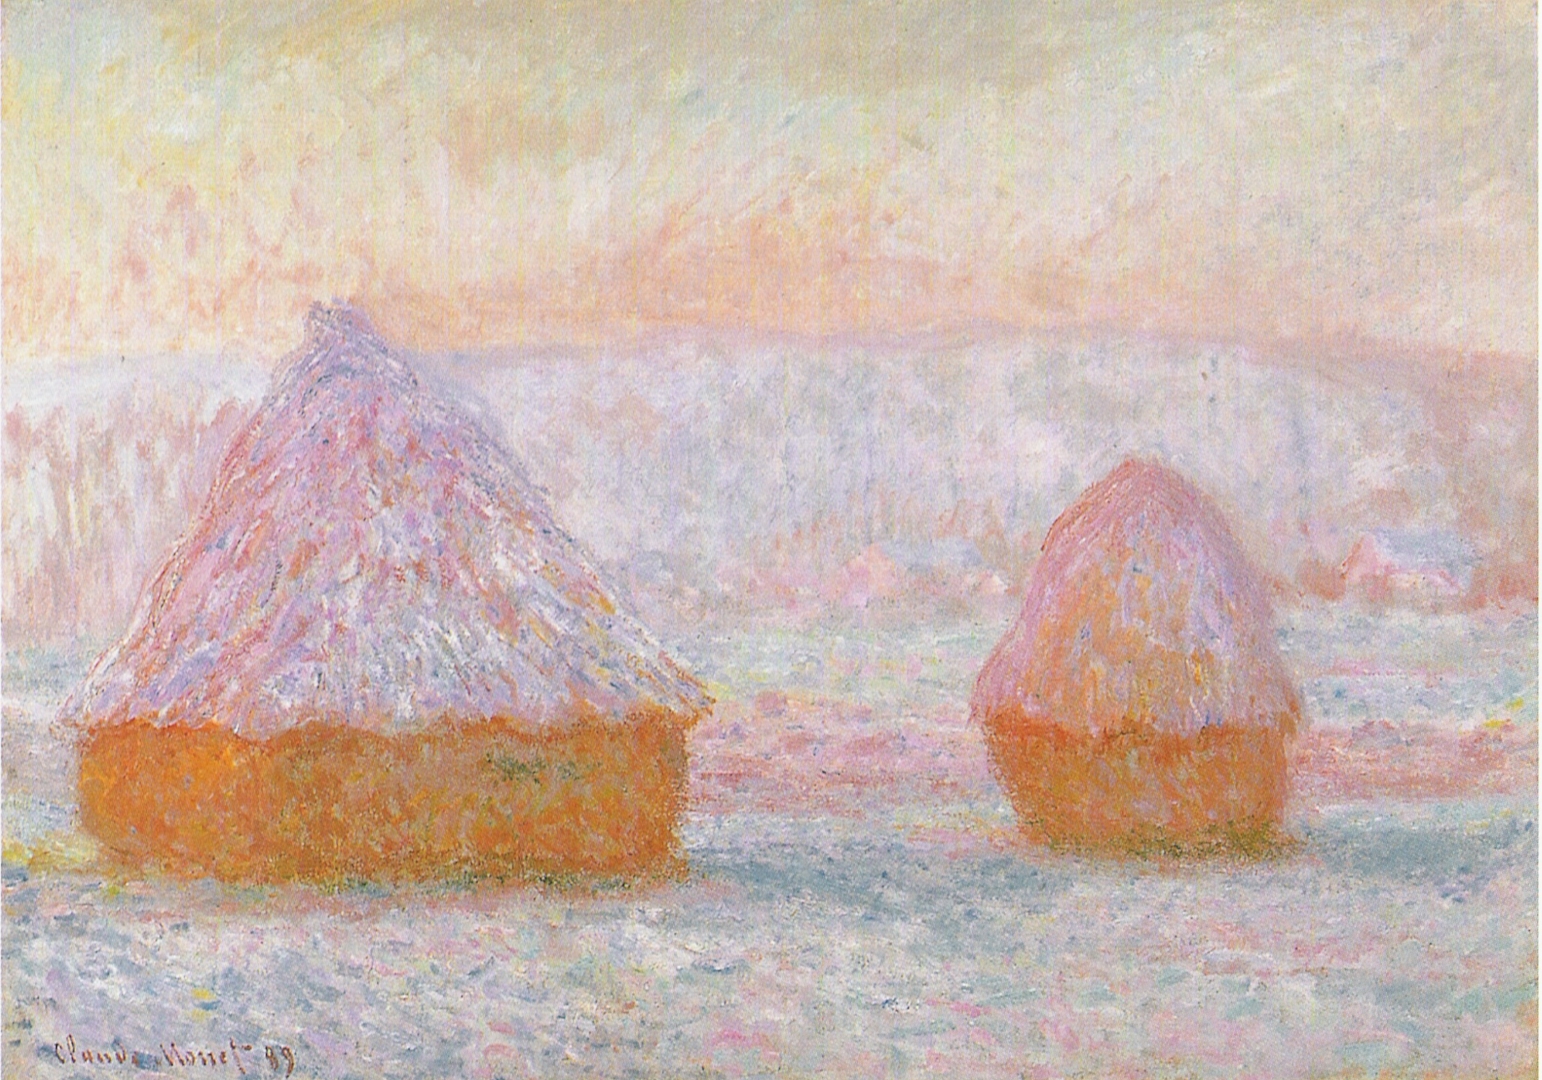 Claude+Monet-1840-1926 (530).jpg